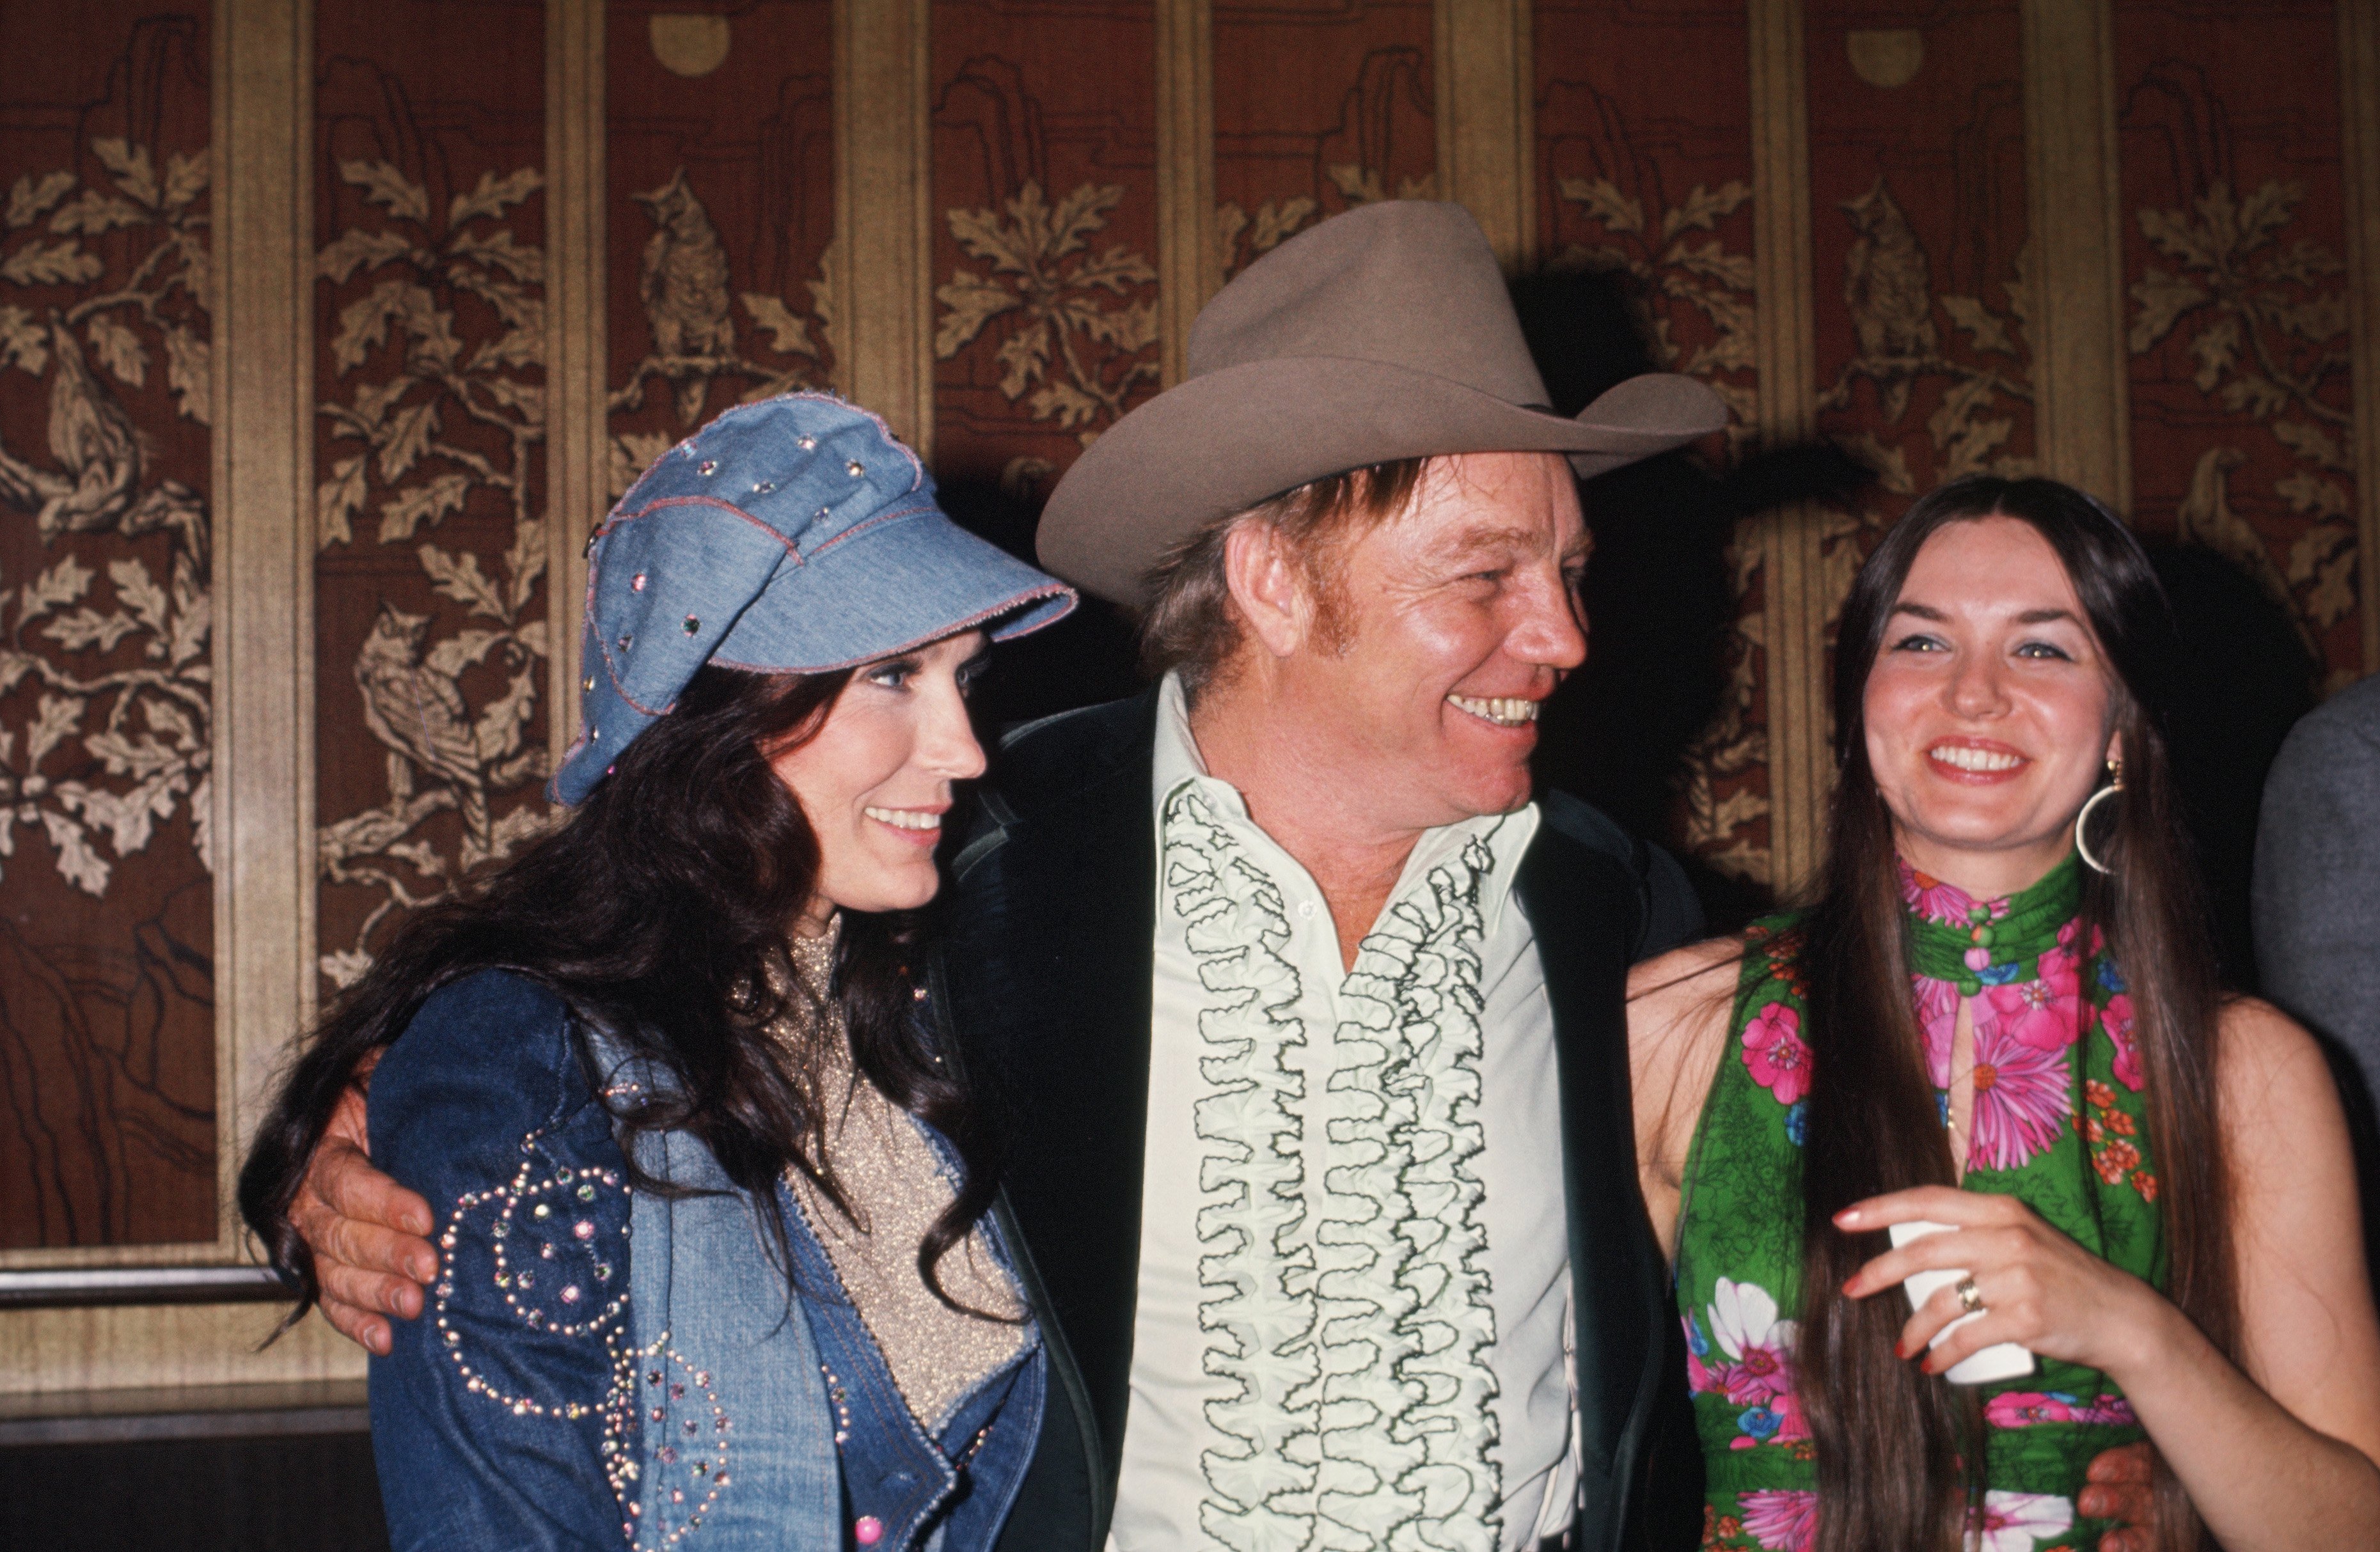 Loretta Lynn(L), Oliver Lynn (C), and Crystal Gayle (R) at a soiree in circa 1976 | Source: Getty Images